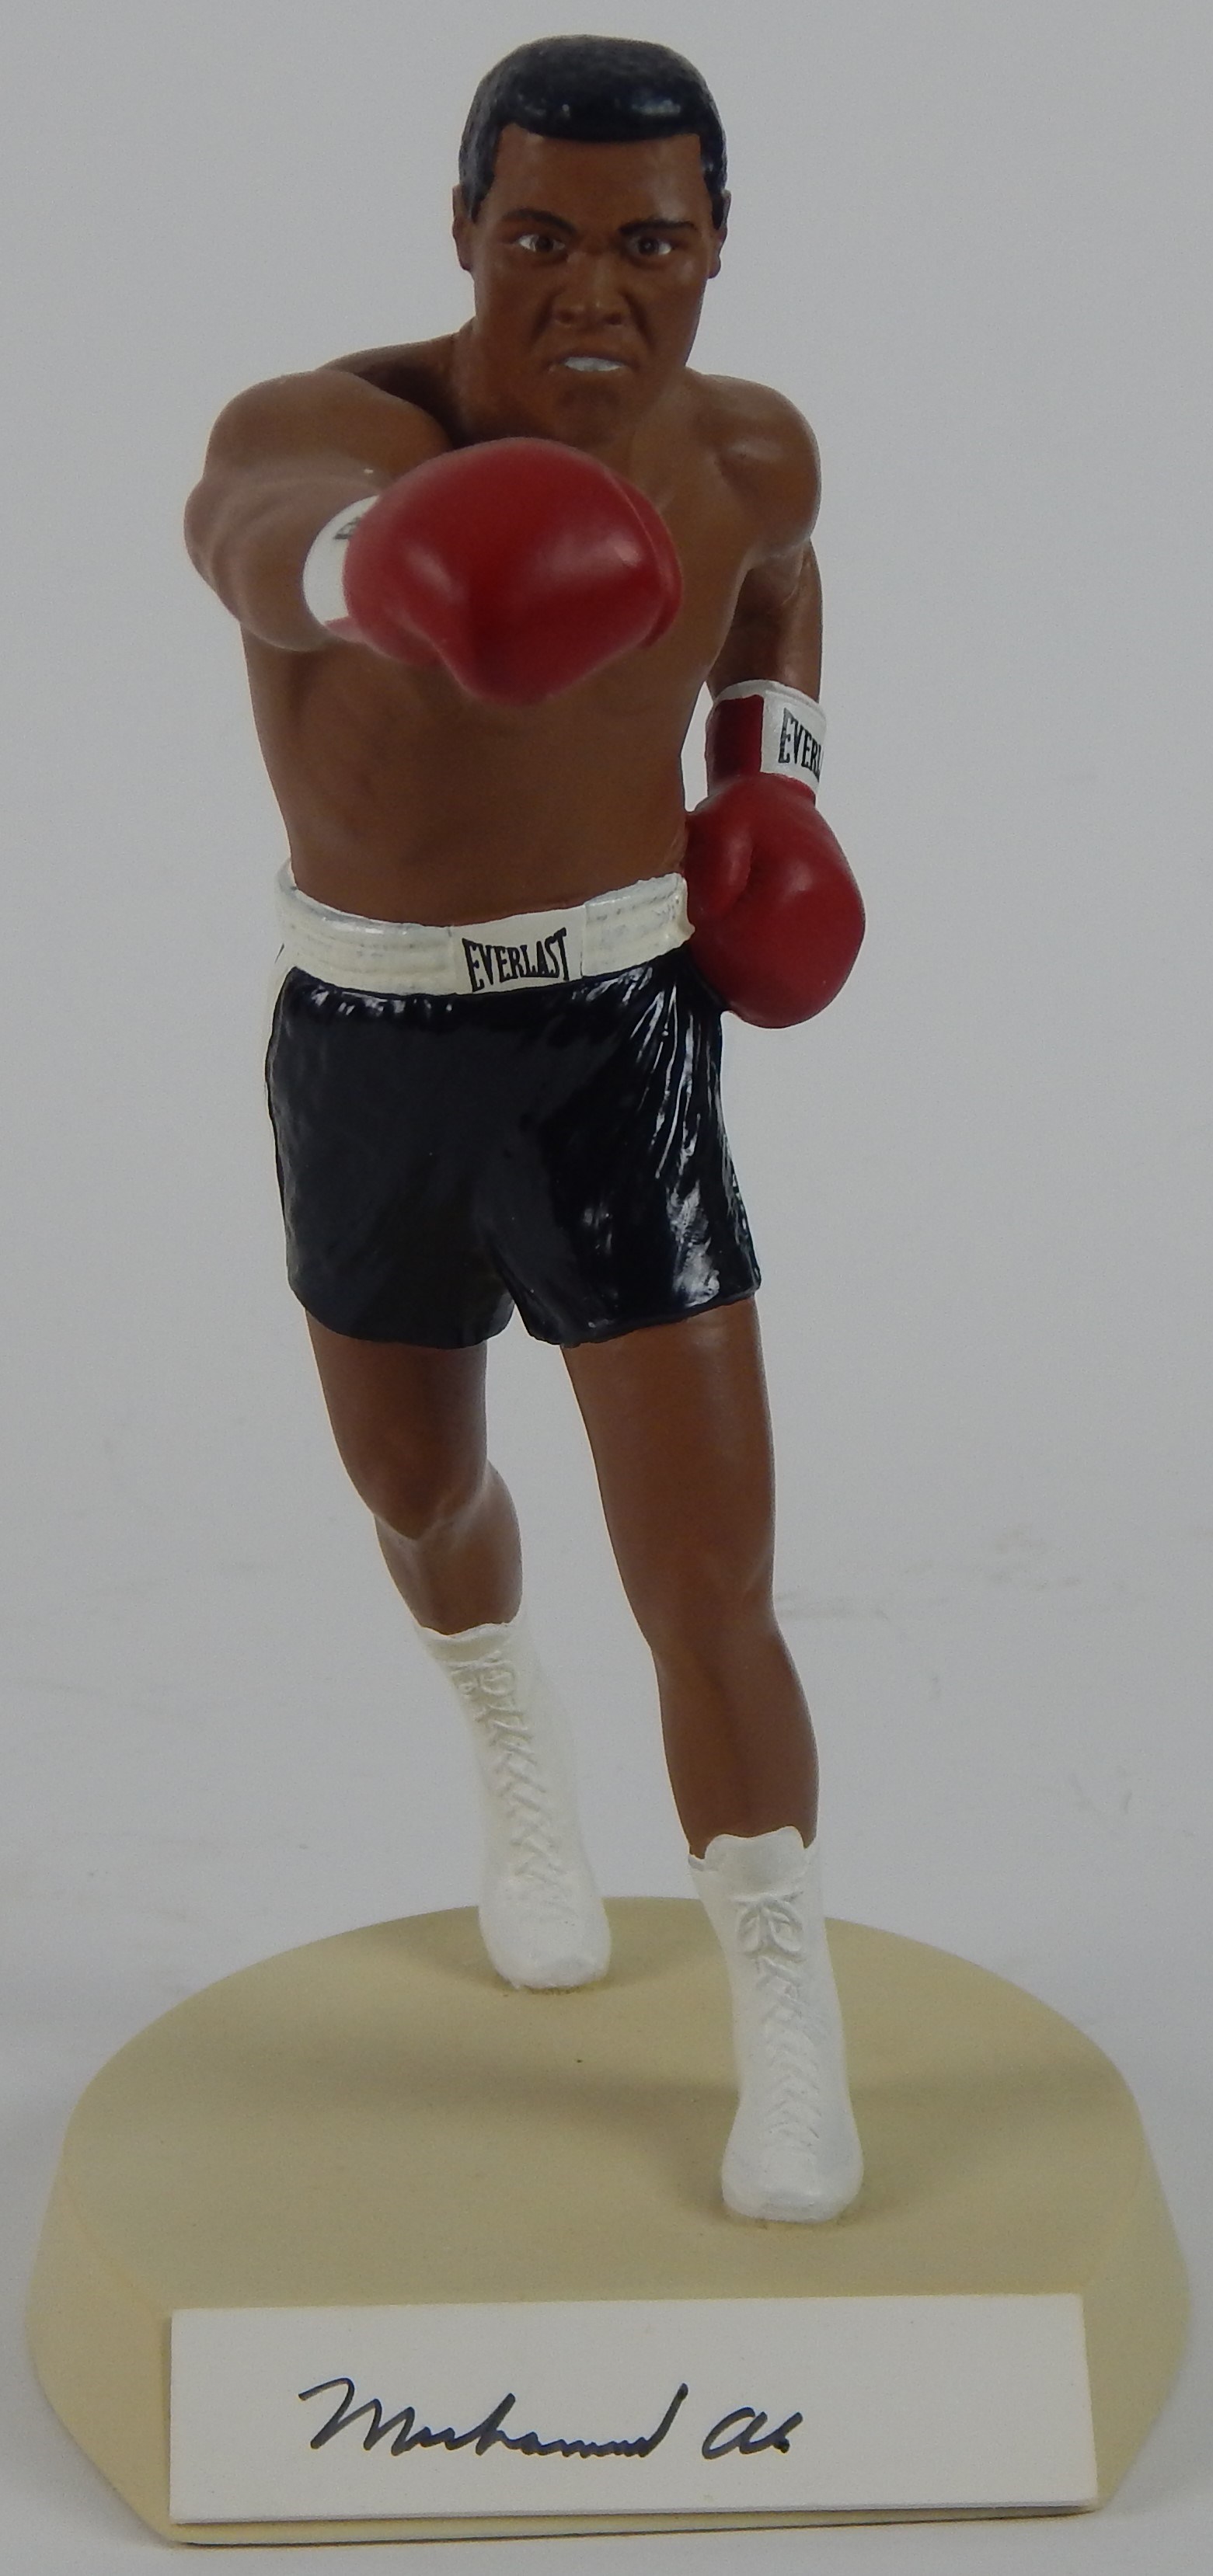 Muhammad Ali & Boxing - Muhammad Ali Signed Salvino Figurine